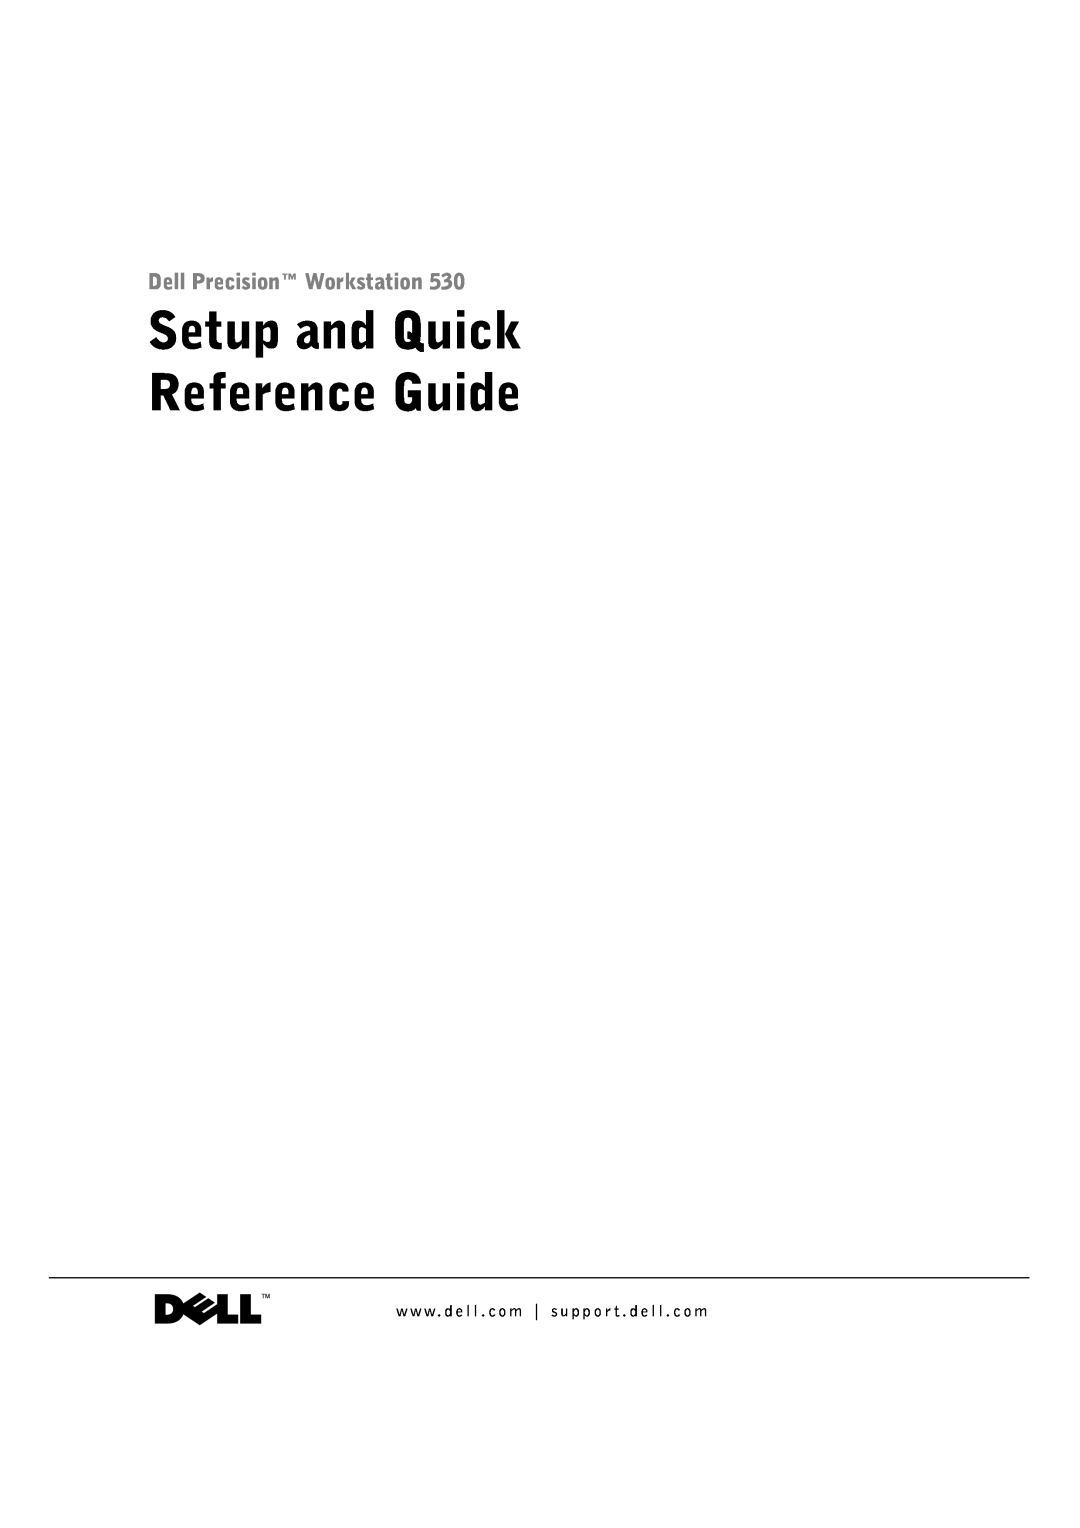 Dell 533CX manual Dell Precision Workstation, Setup and Quick Reference Guide 